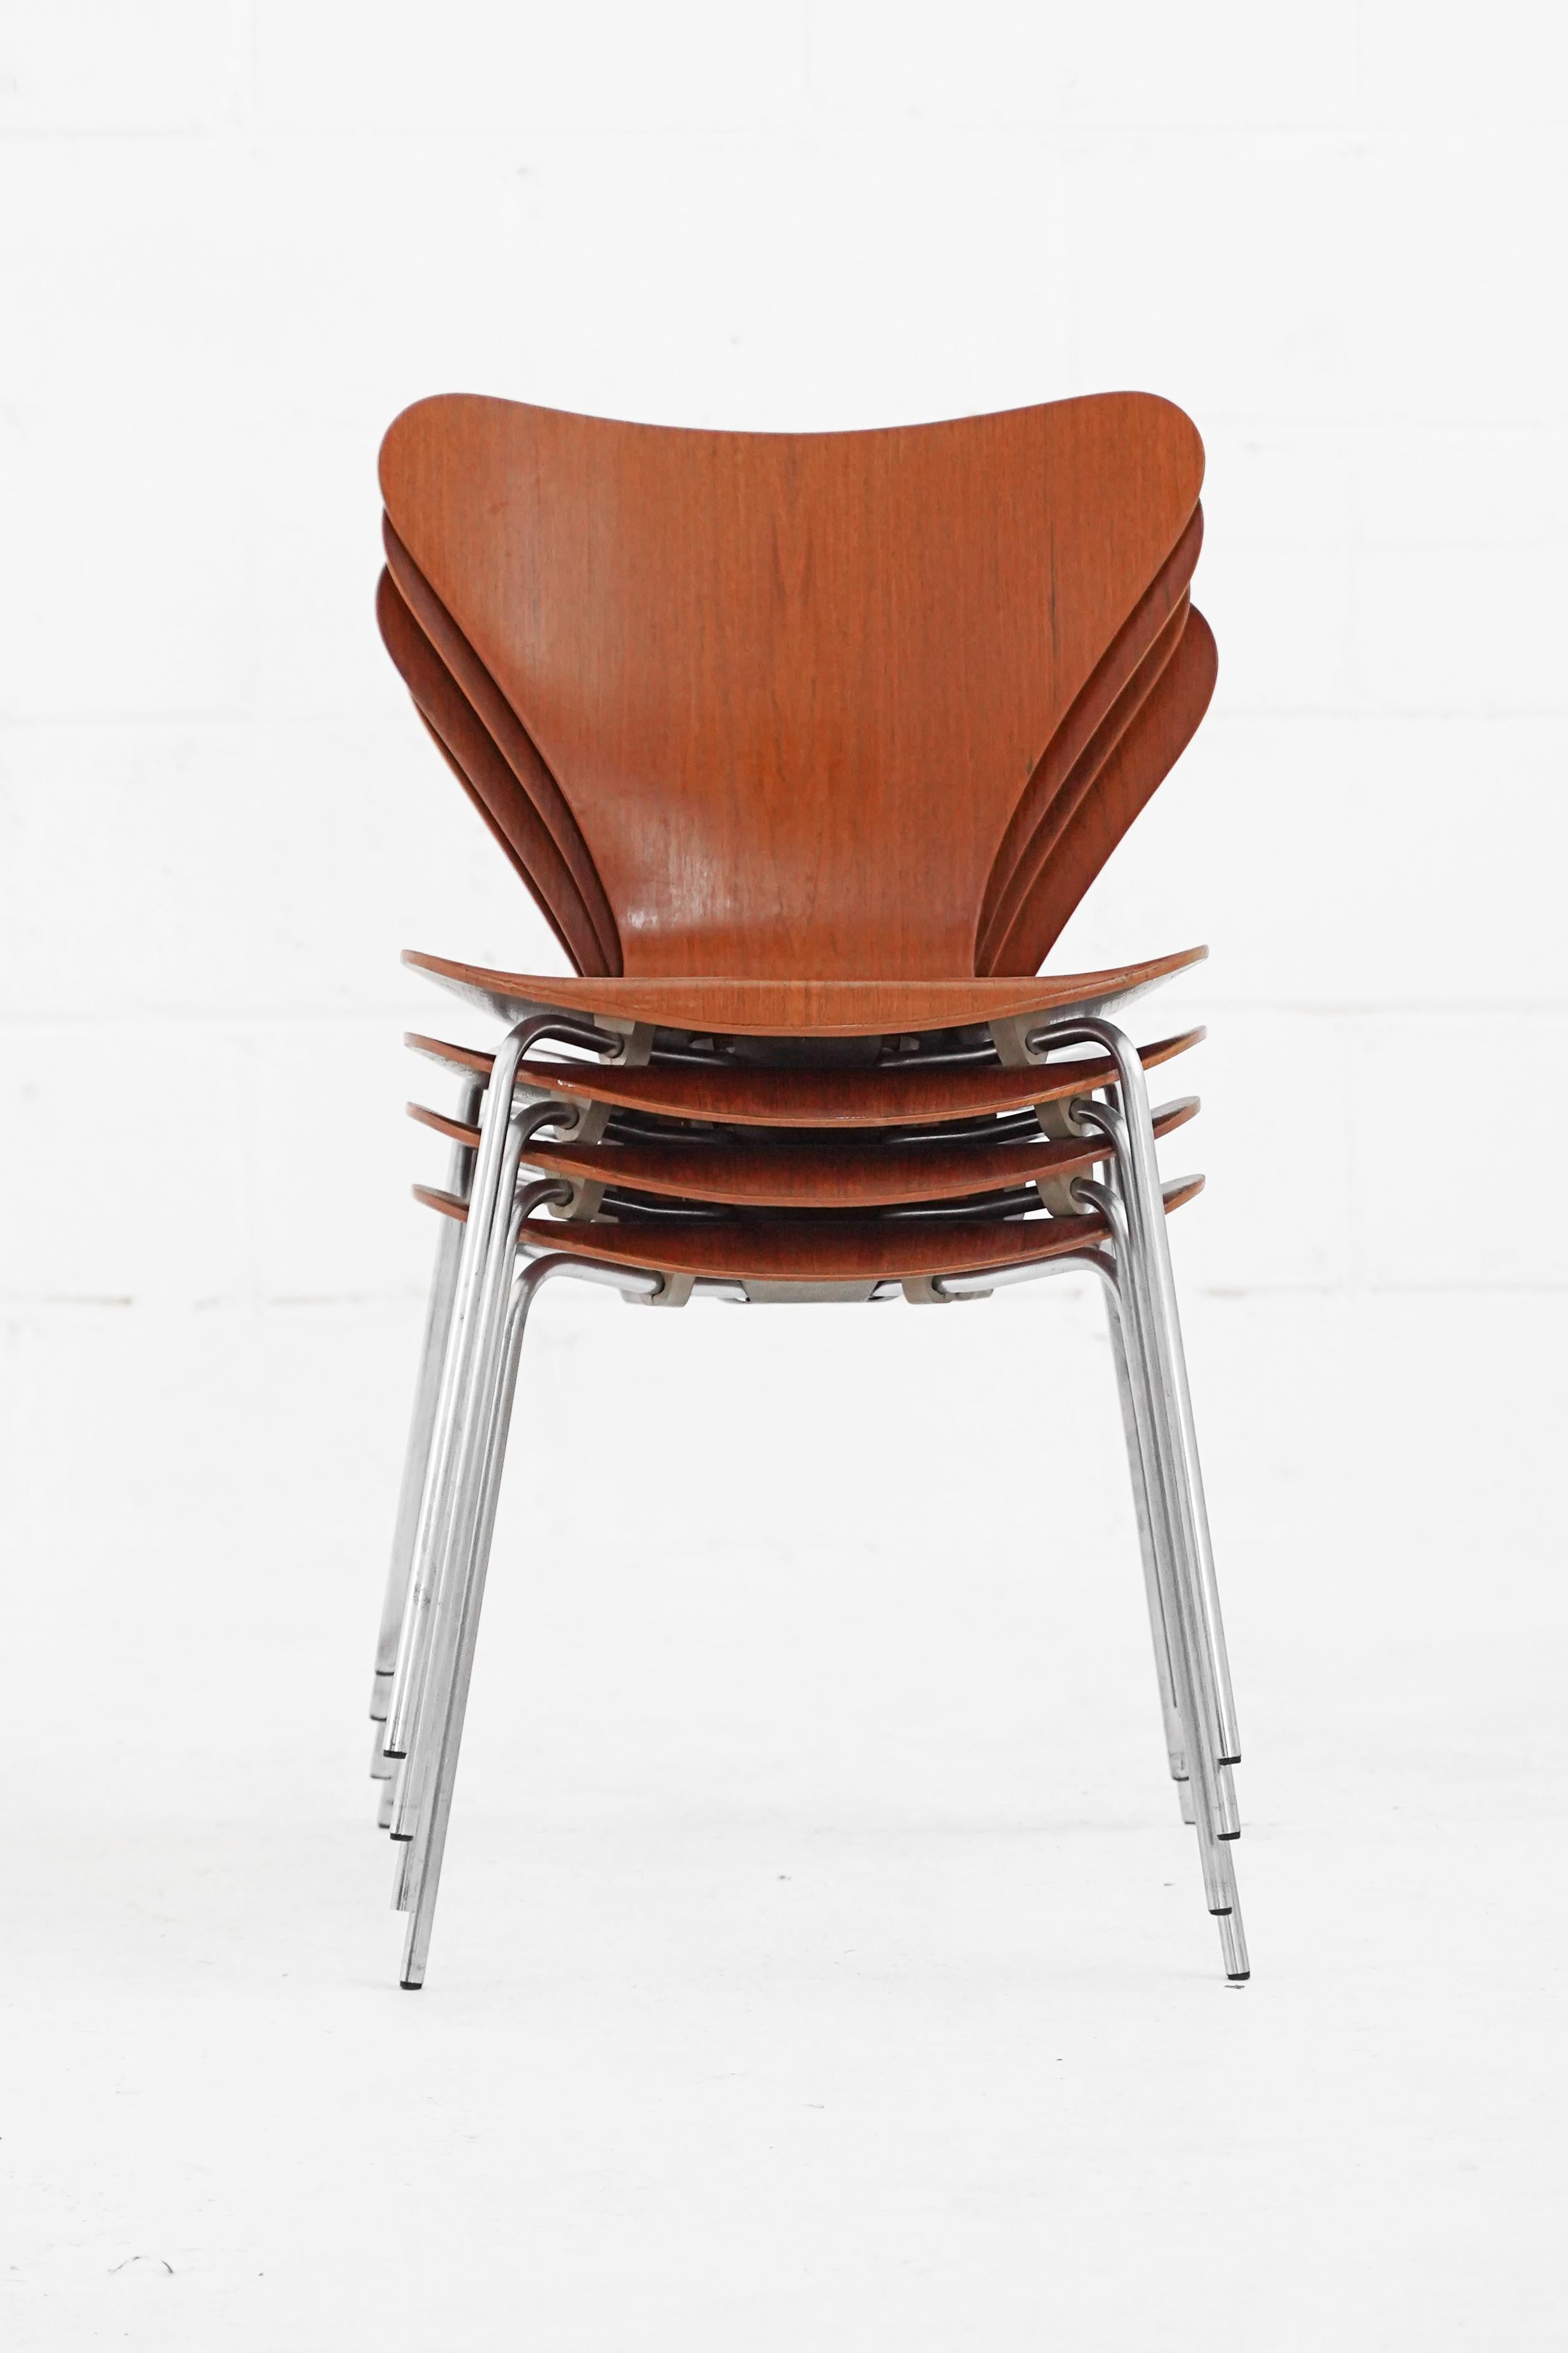 Set of 4 Series 7 Butterfly Chairs in Teak by Arne Jacobsen for Fritz Hansen 1